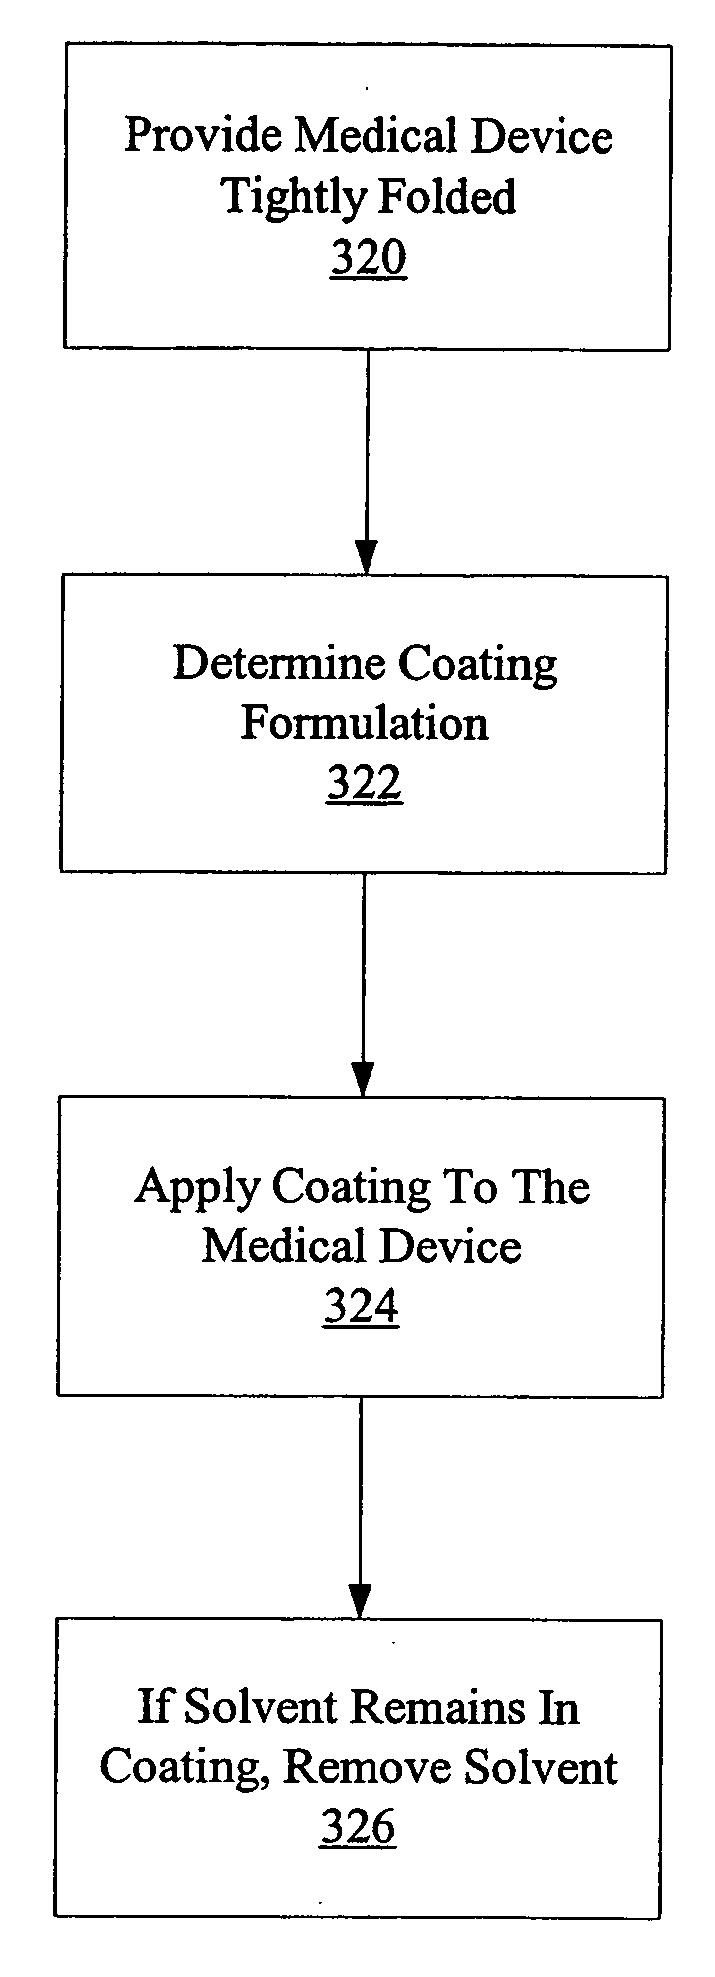 Method of coating a folded medical device